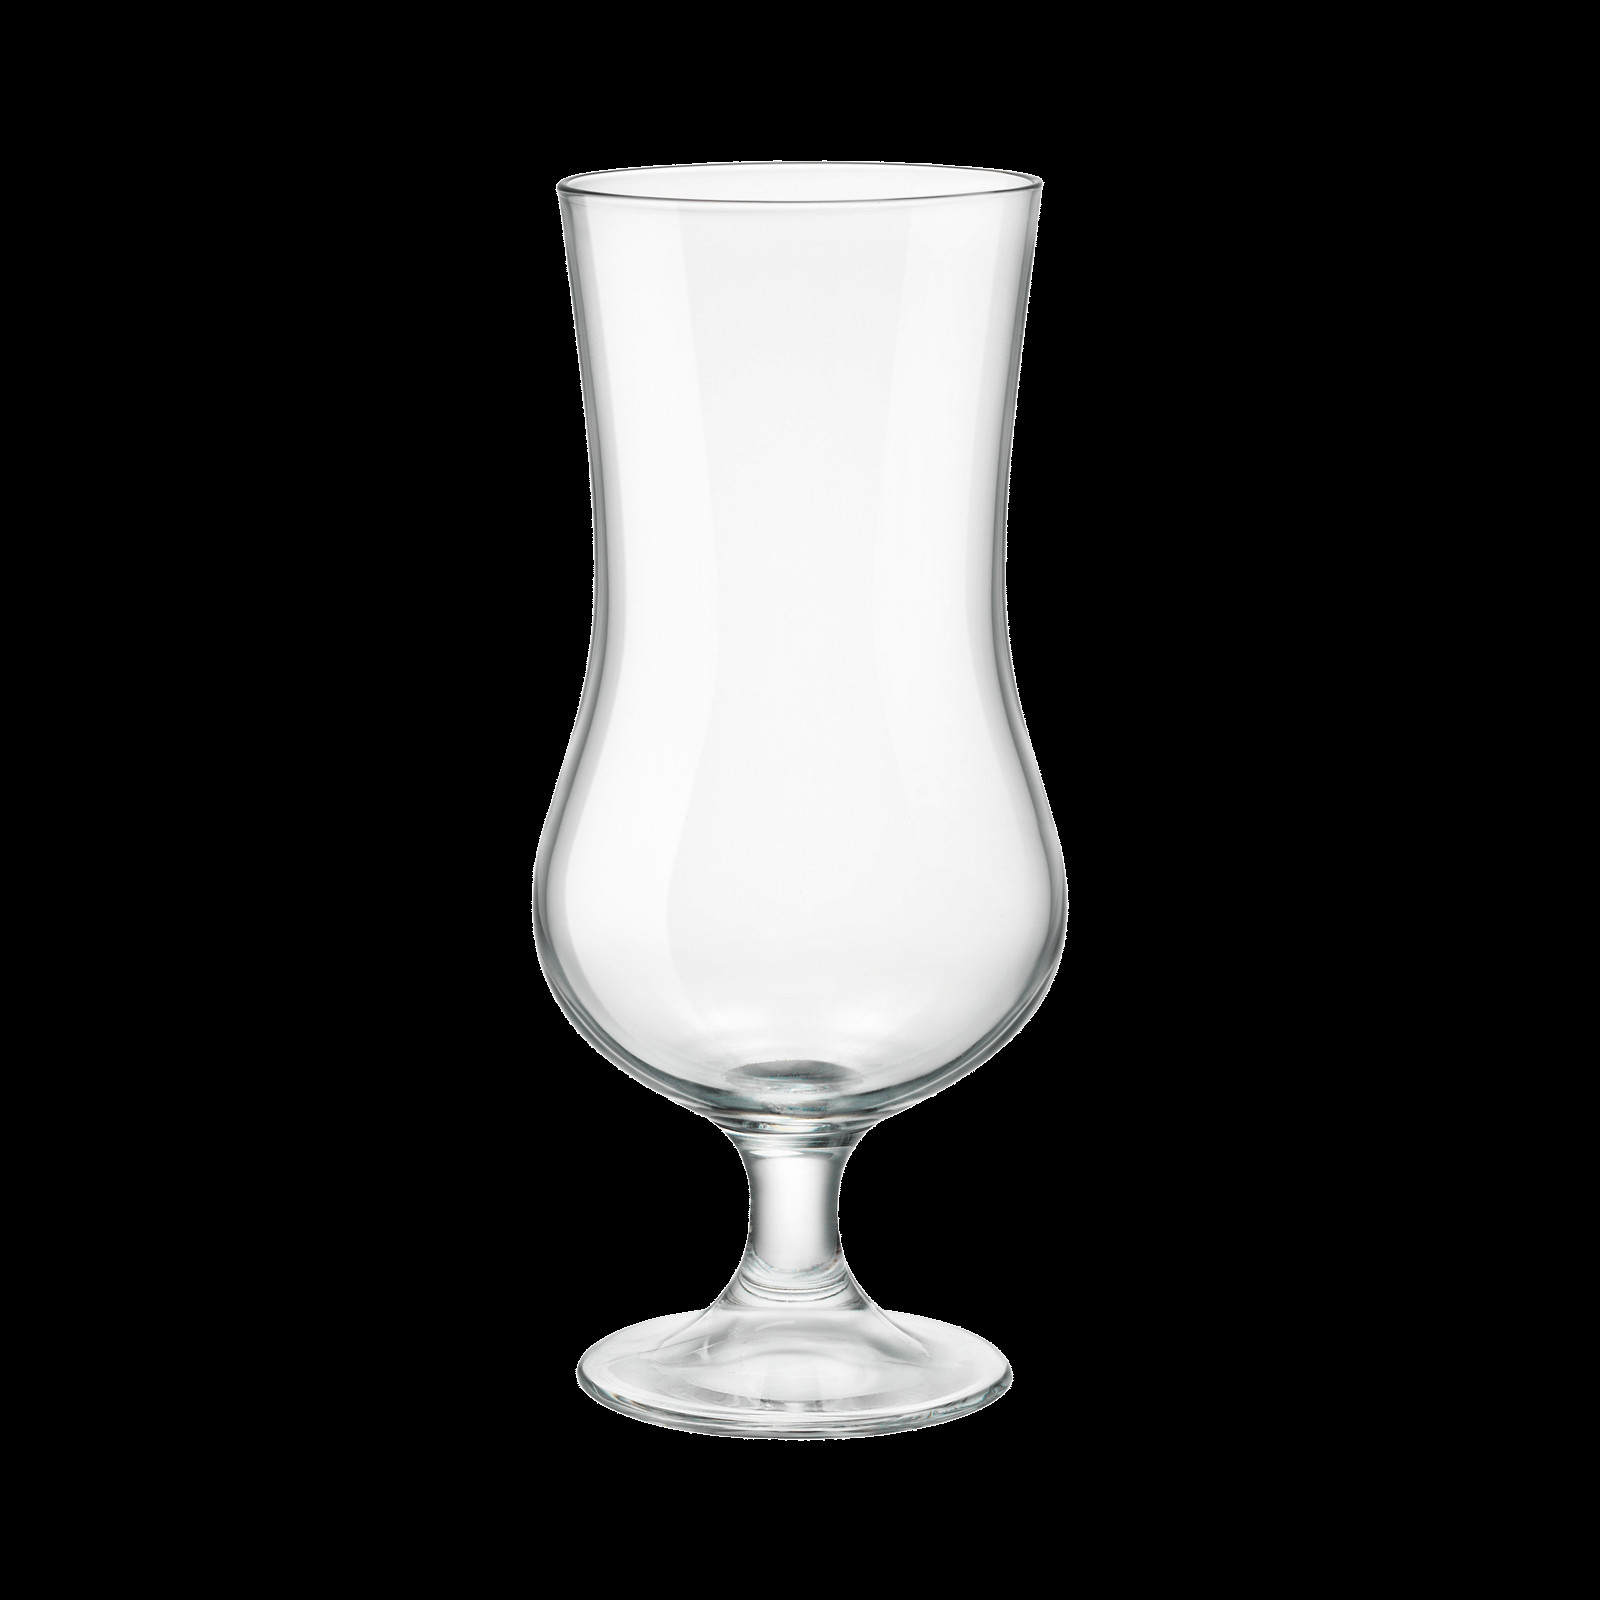 19 Elegant Giant Margarita Glass Vase 2024 free download giant margarita glass vase of archivi products bormioli rocco throughout large beer glass